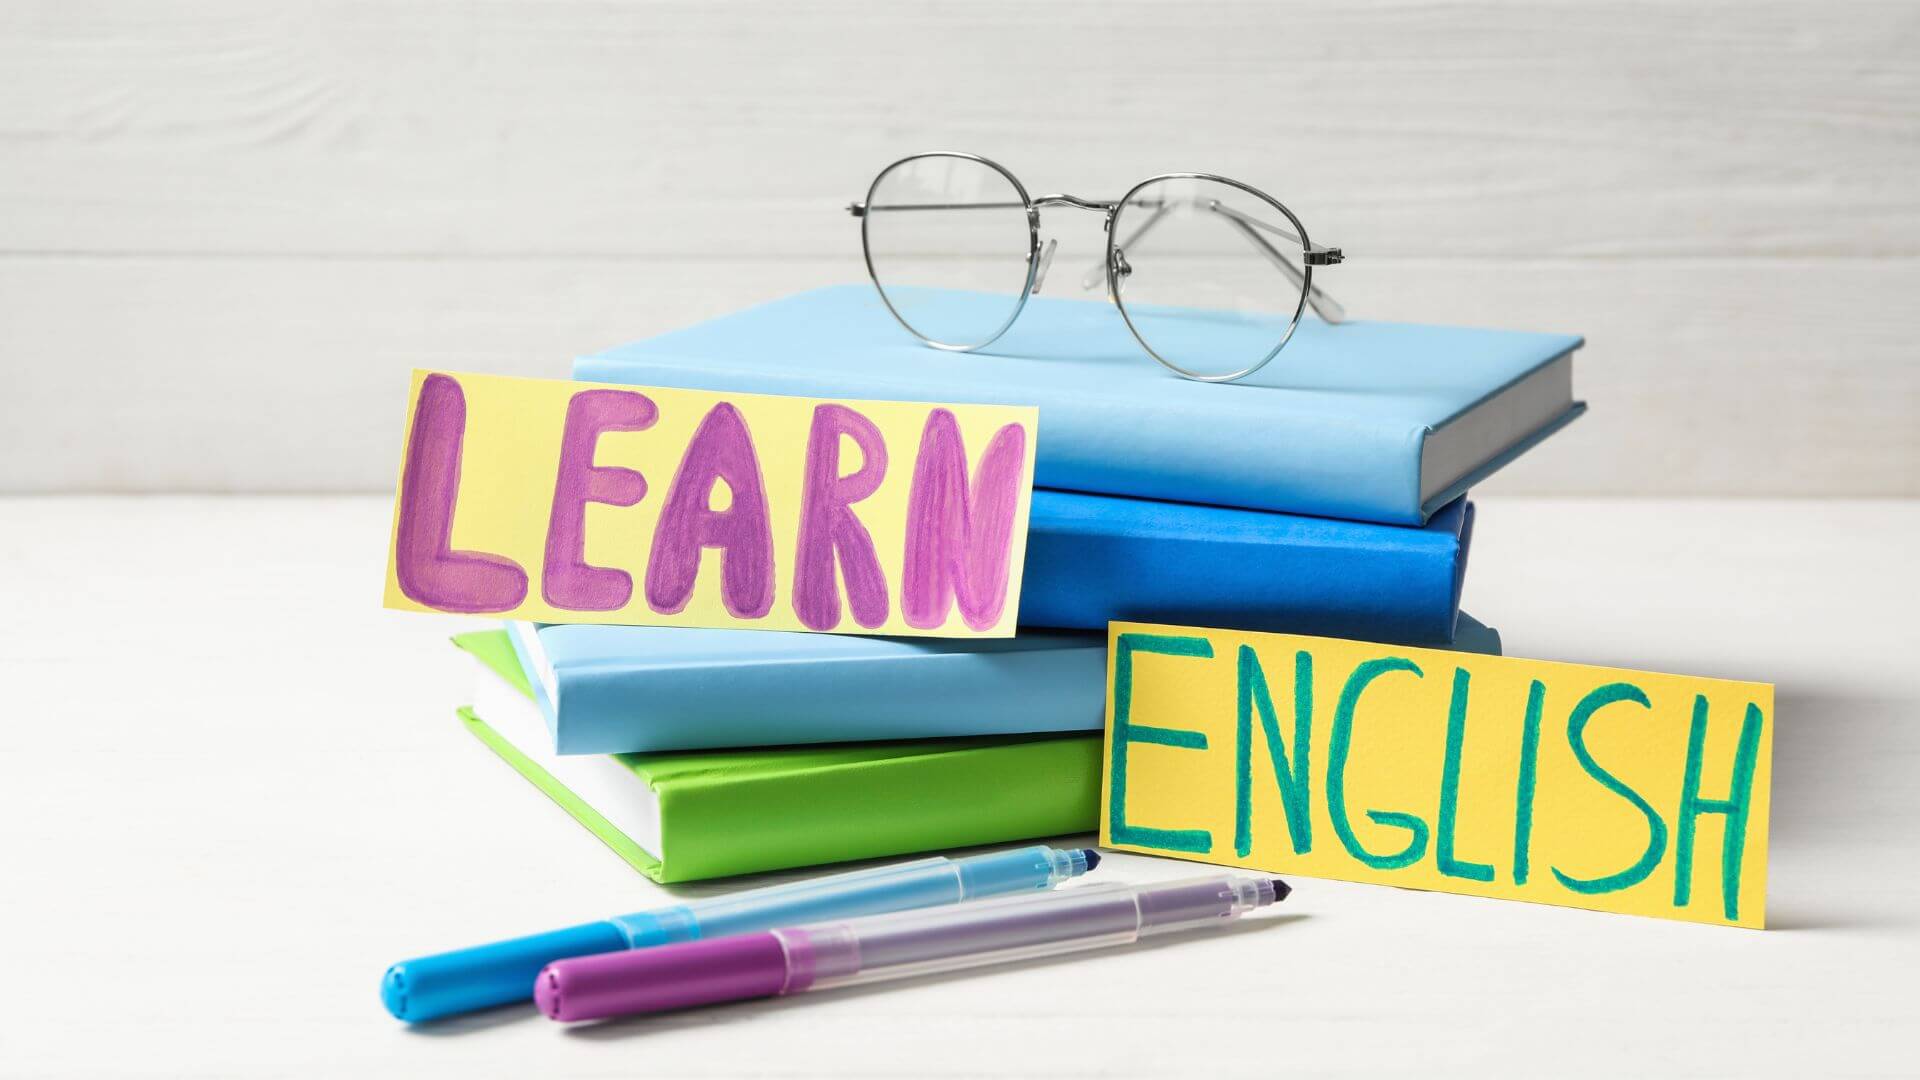 aprender inglés, aprender a hablar inglés, aprender inglés, estudiar inglés, aprender inglés